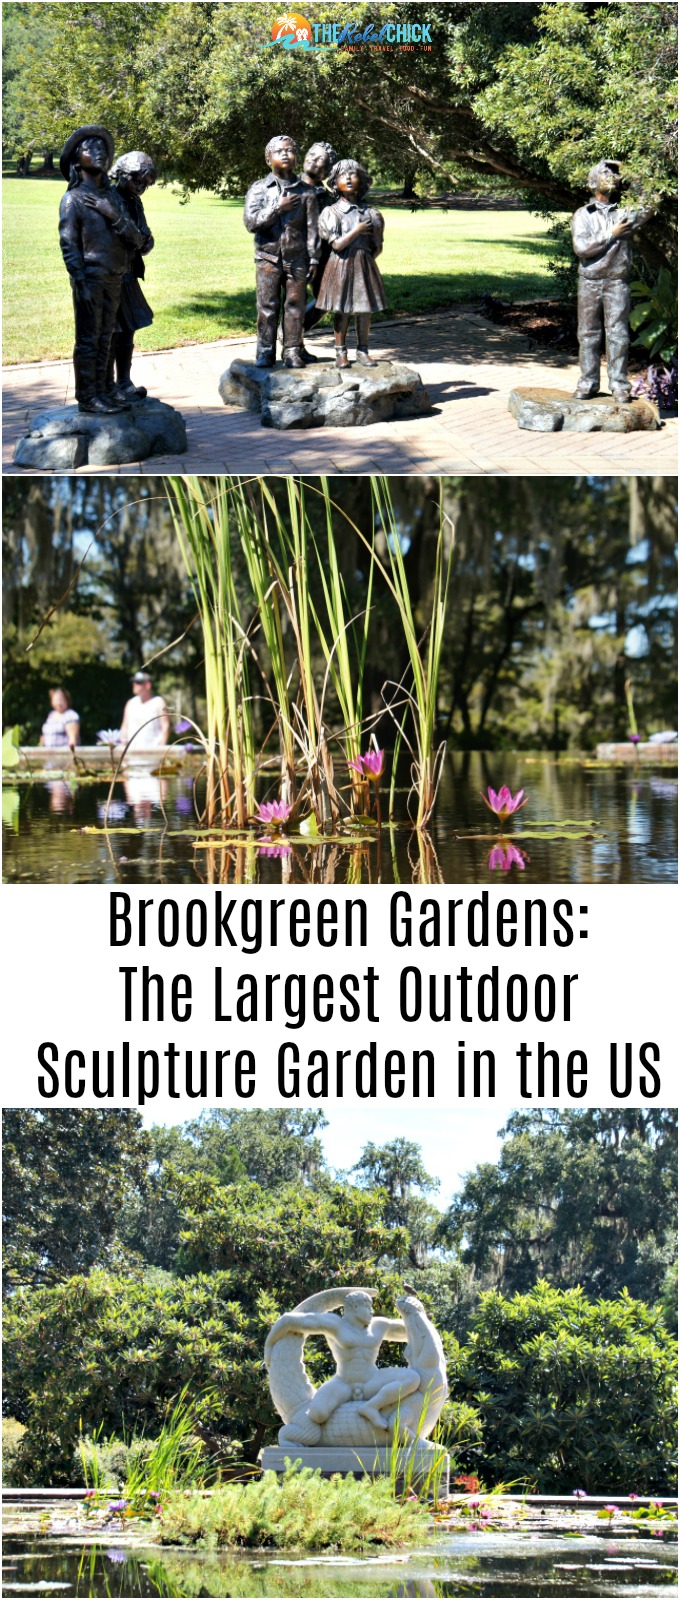 Brookgreen Gardens: The Largest Outdoor Sculpture Garden in the US